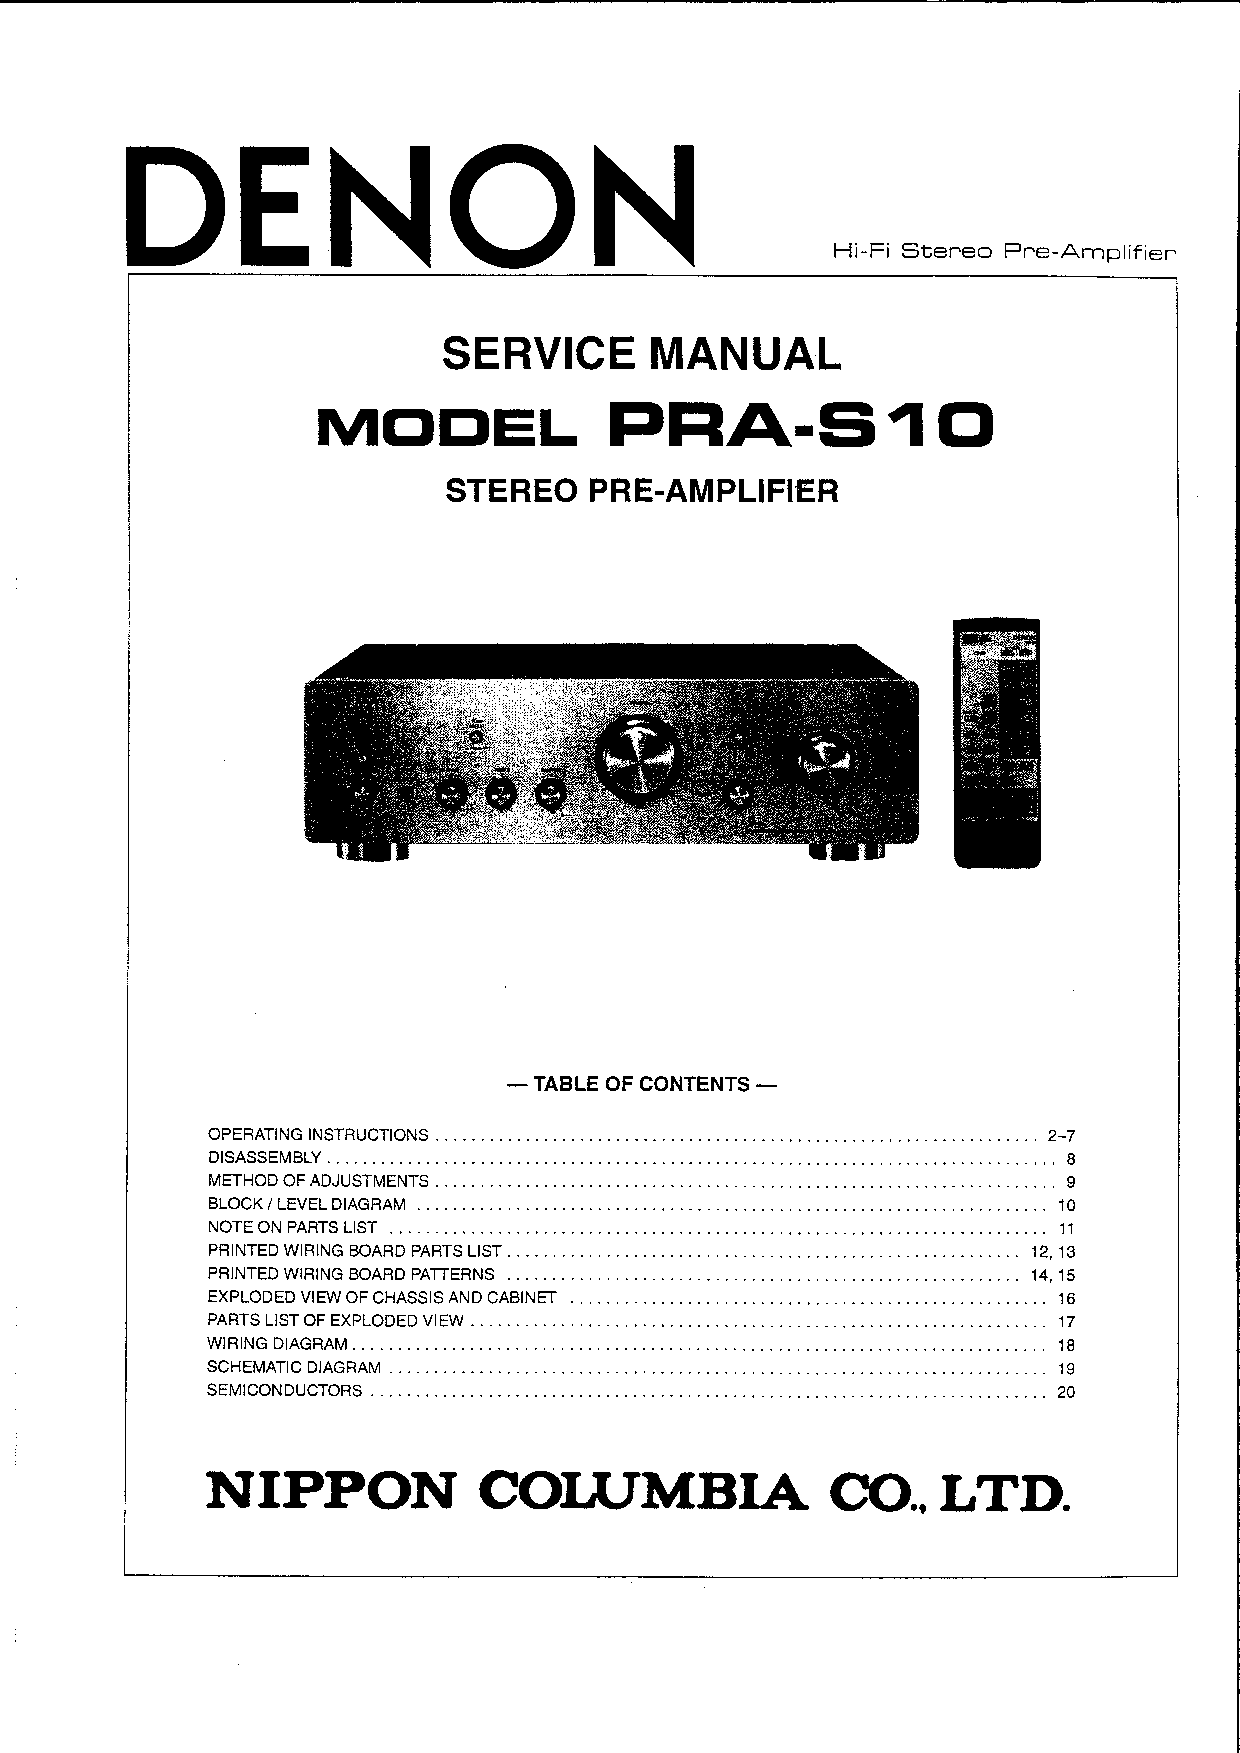 Denon PRA-S10 Service Manual